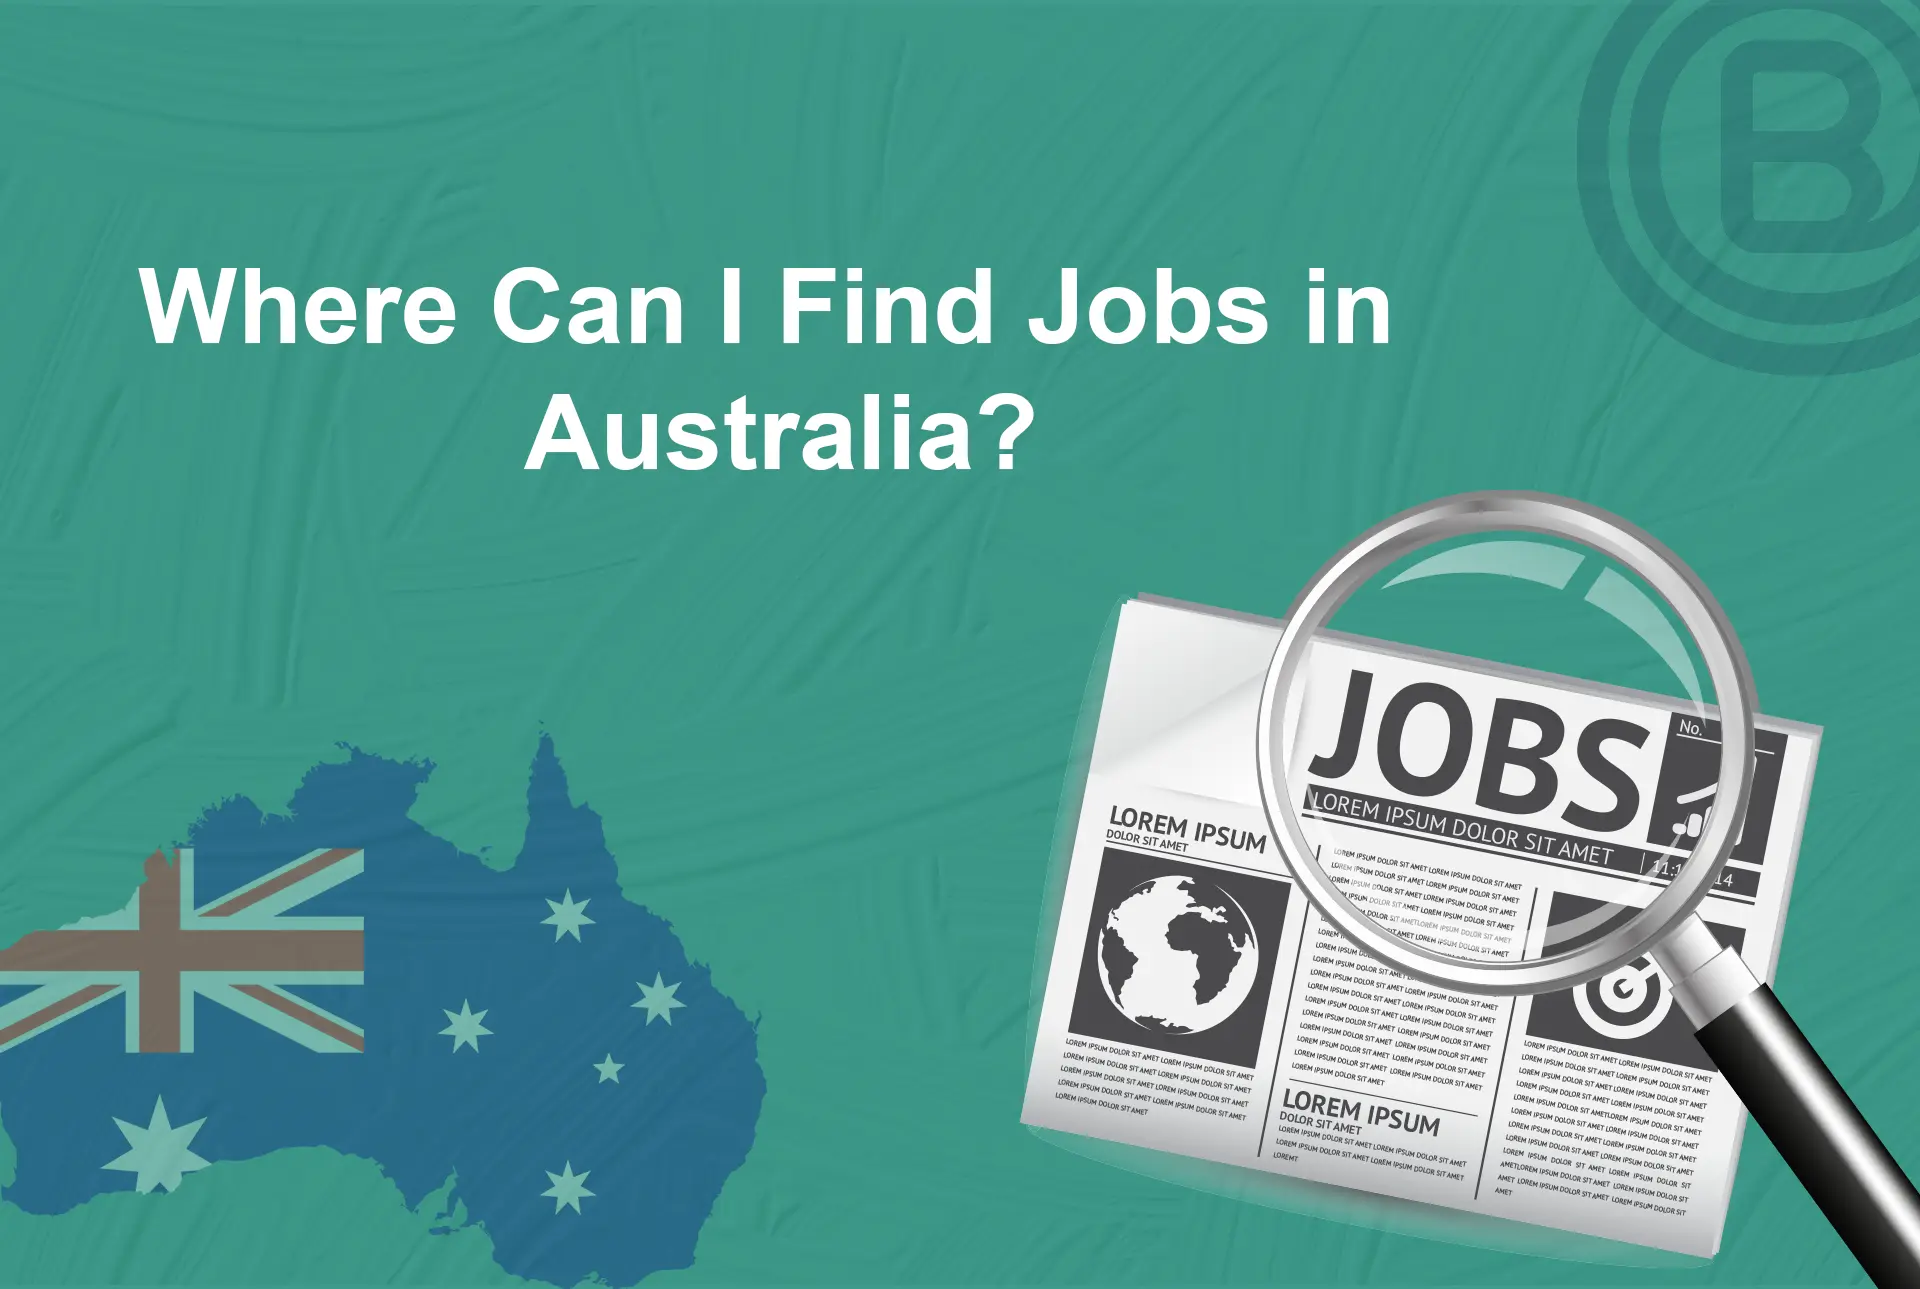 Where can I find jobs in Australia?